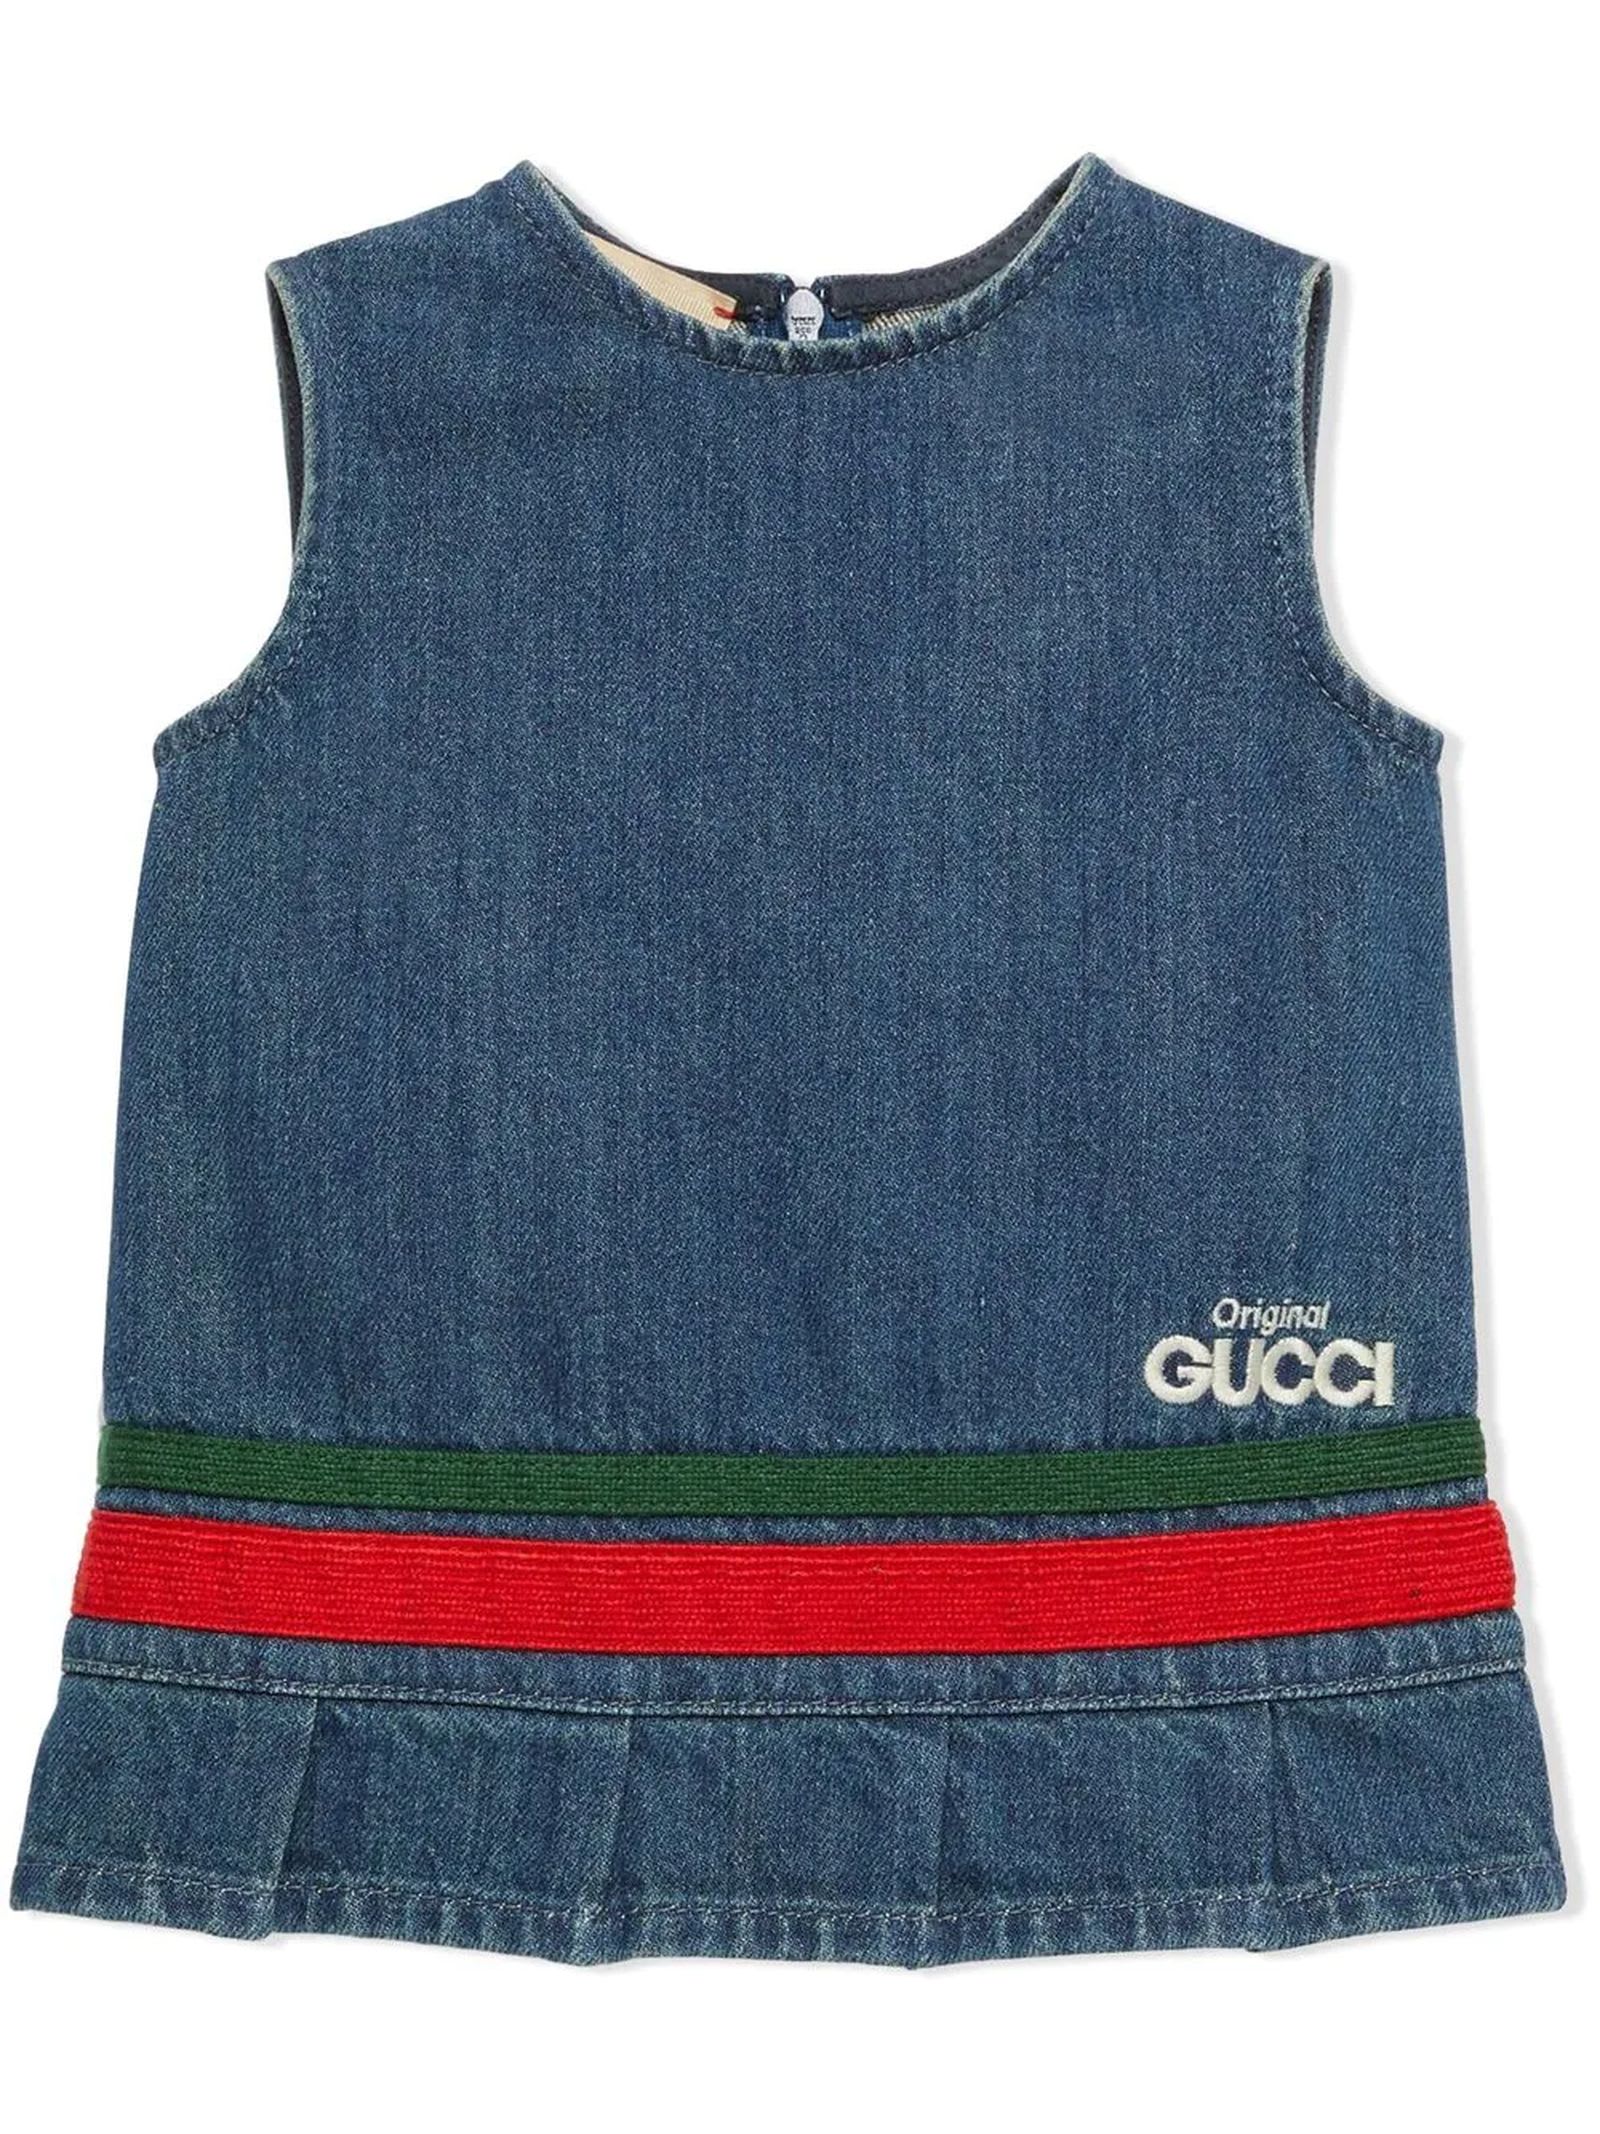 Baby Original Gucci Denim Dress